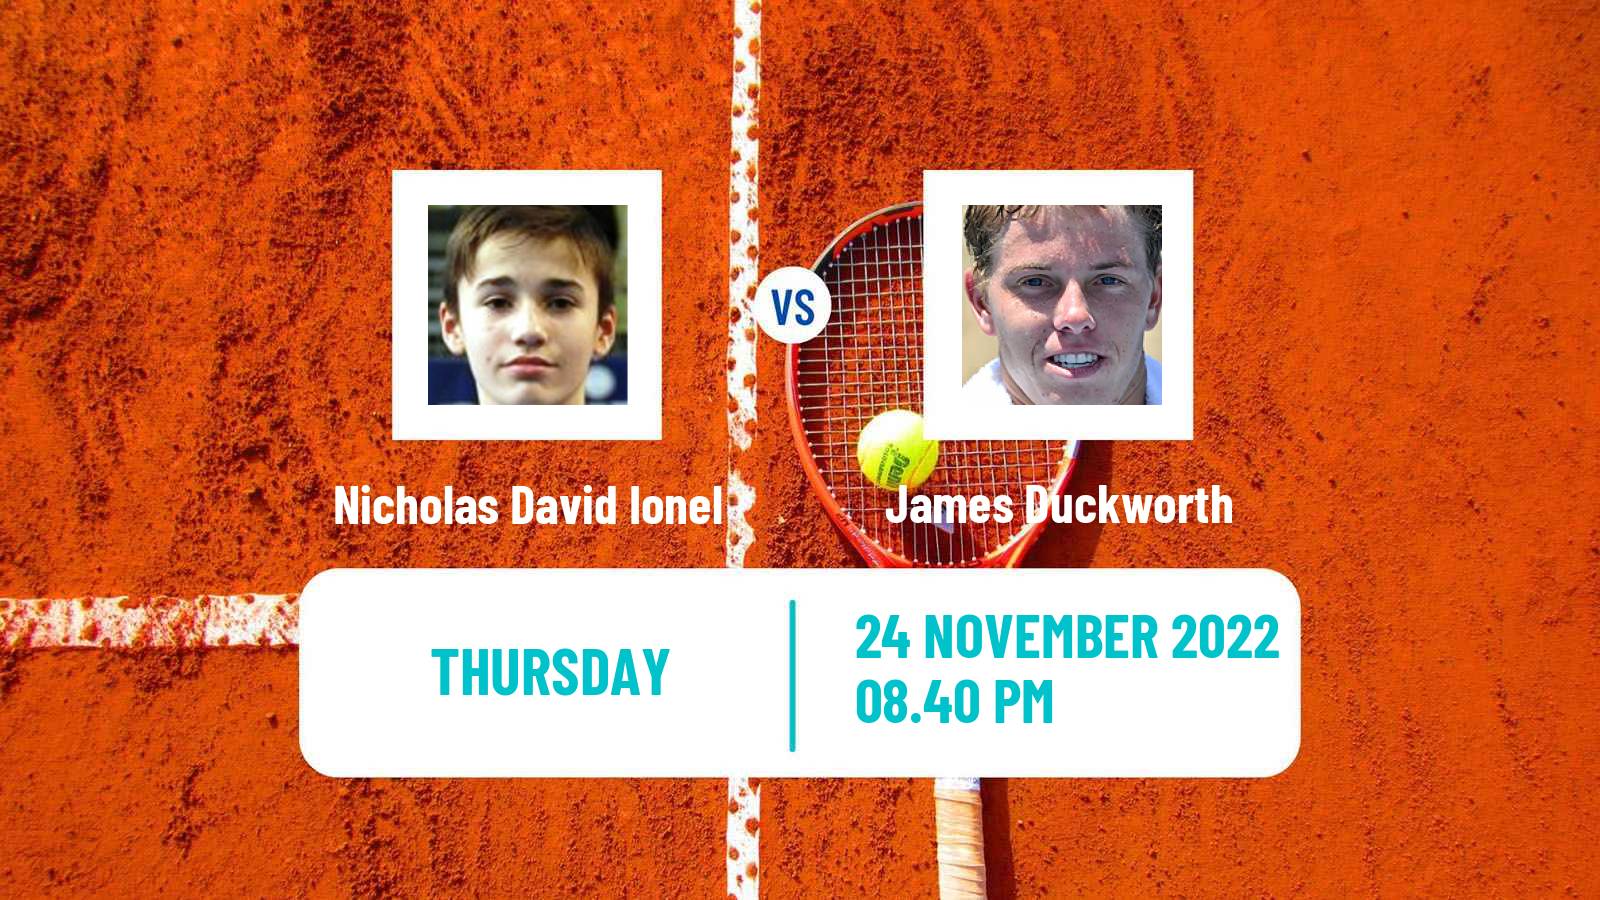 Tennis ATP Challenger Nicholas David Ionel - James Duckworth